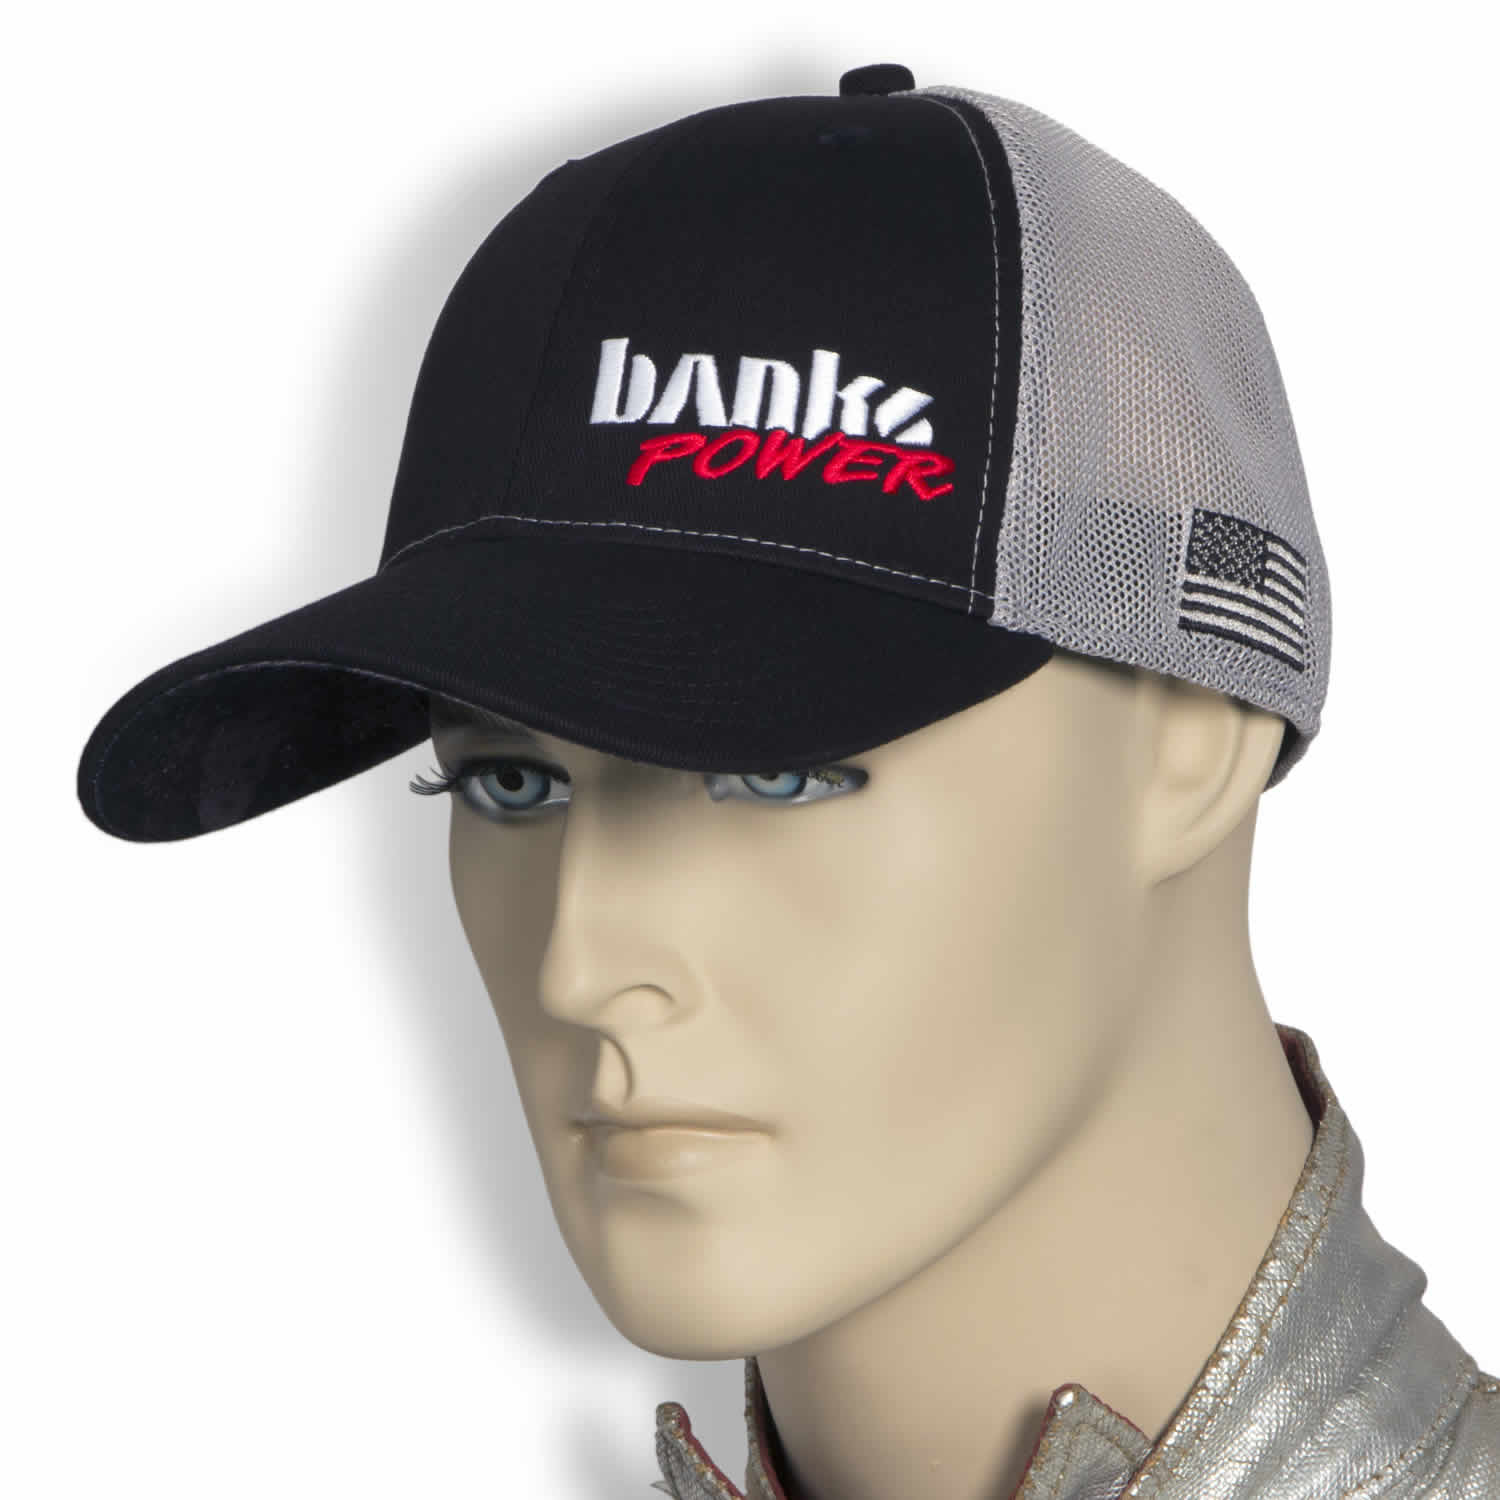 Banks Power snap-back hat